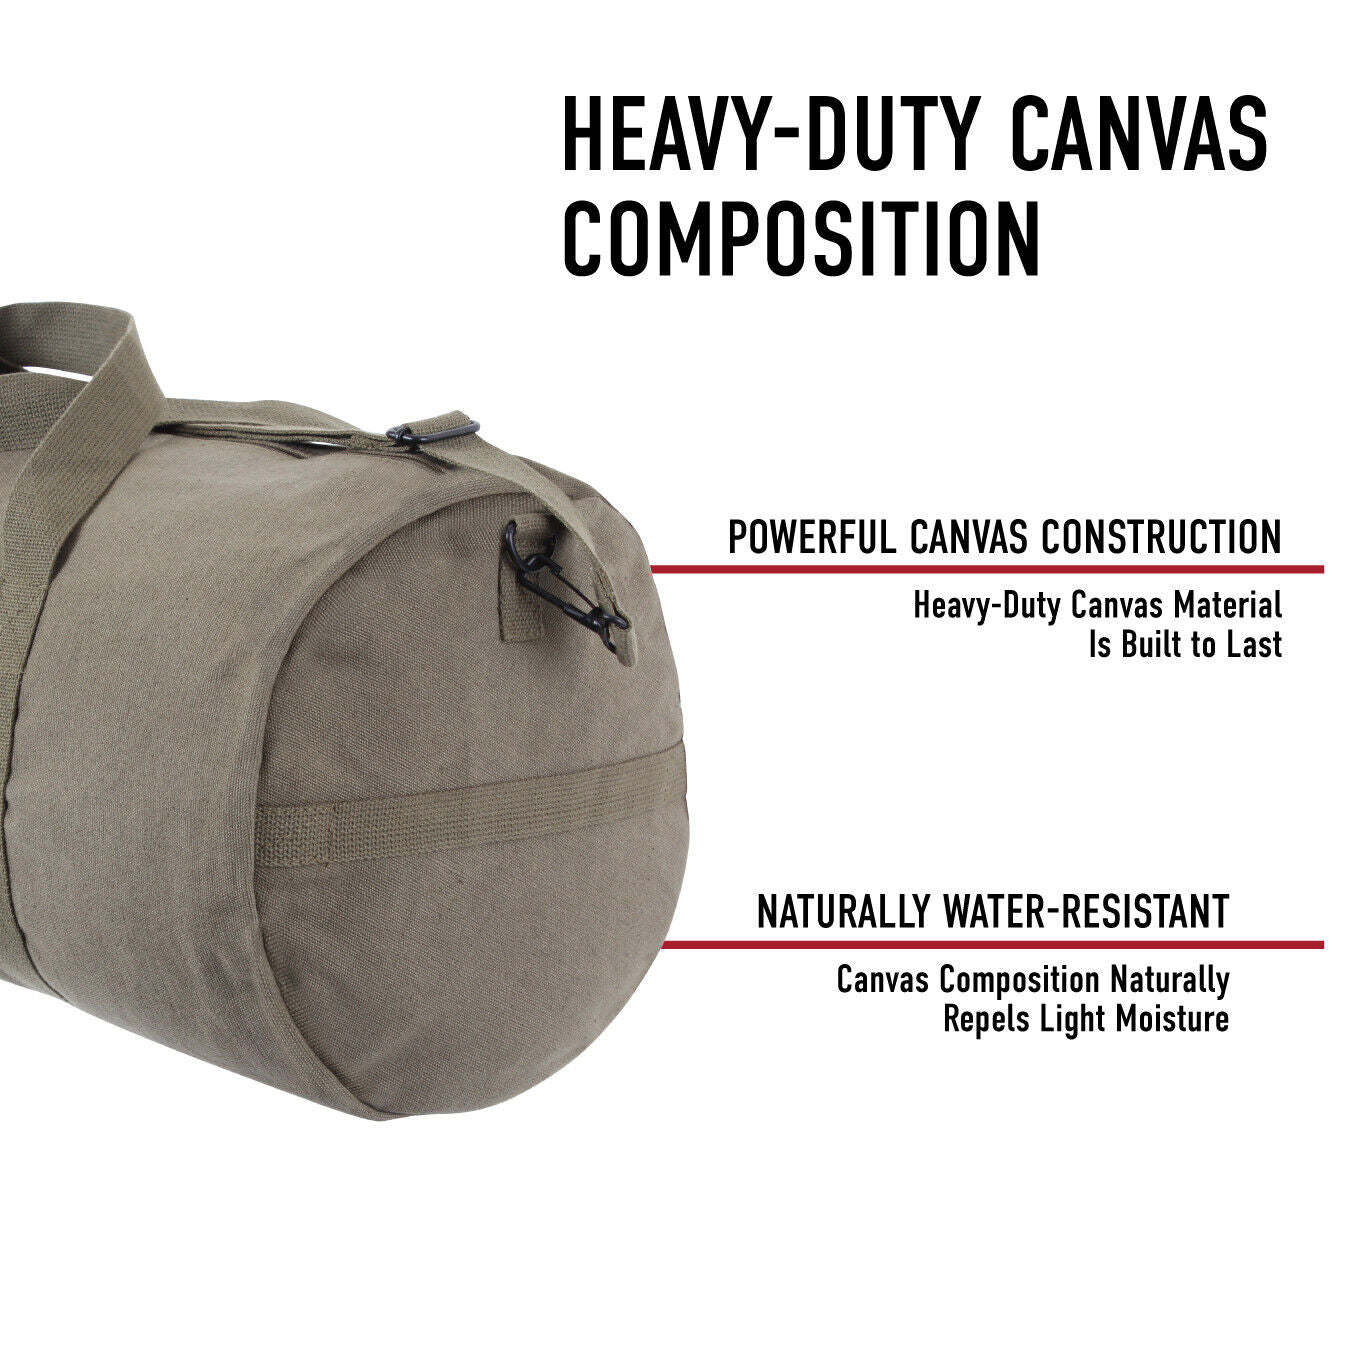 19 Inch Canvas Shoulder Duffle Bag In Work Brown - Heavyweight Travel Bag